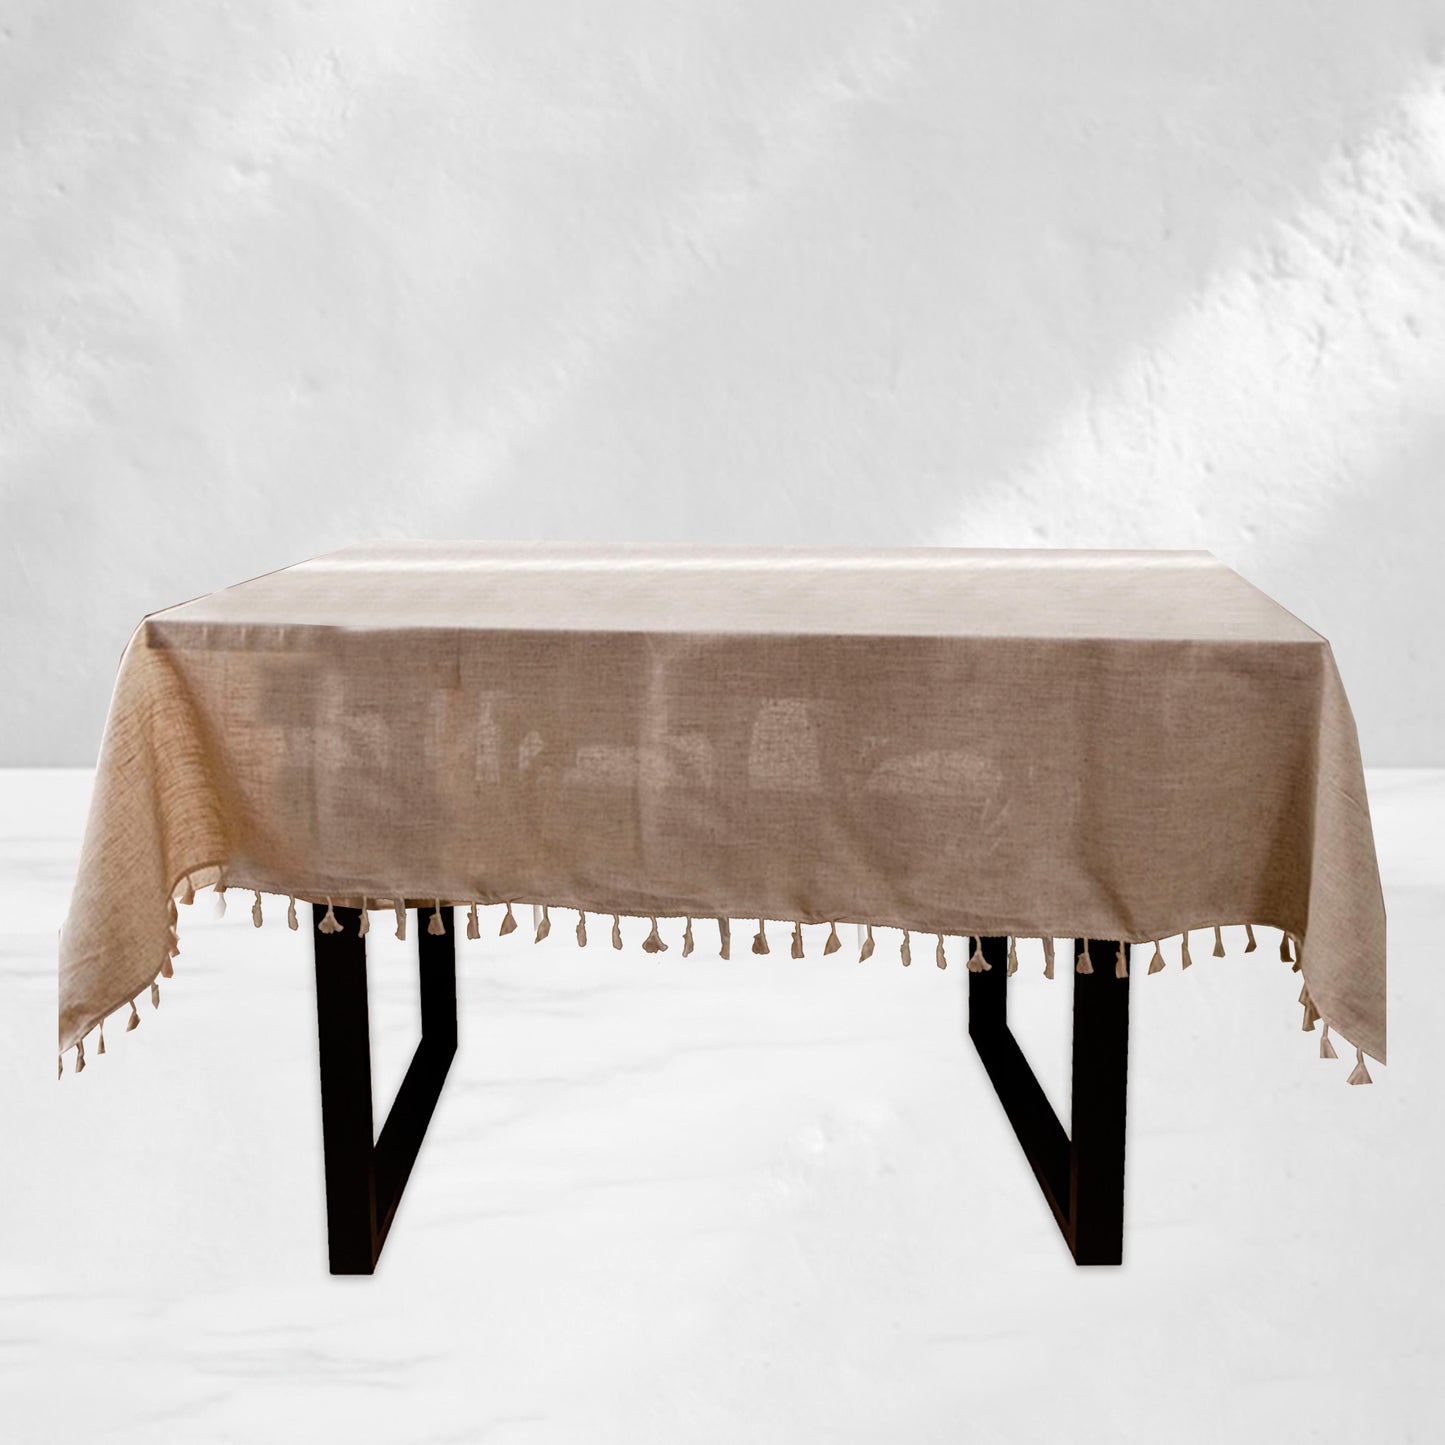 Coffee Linen Tassels Tablecloth